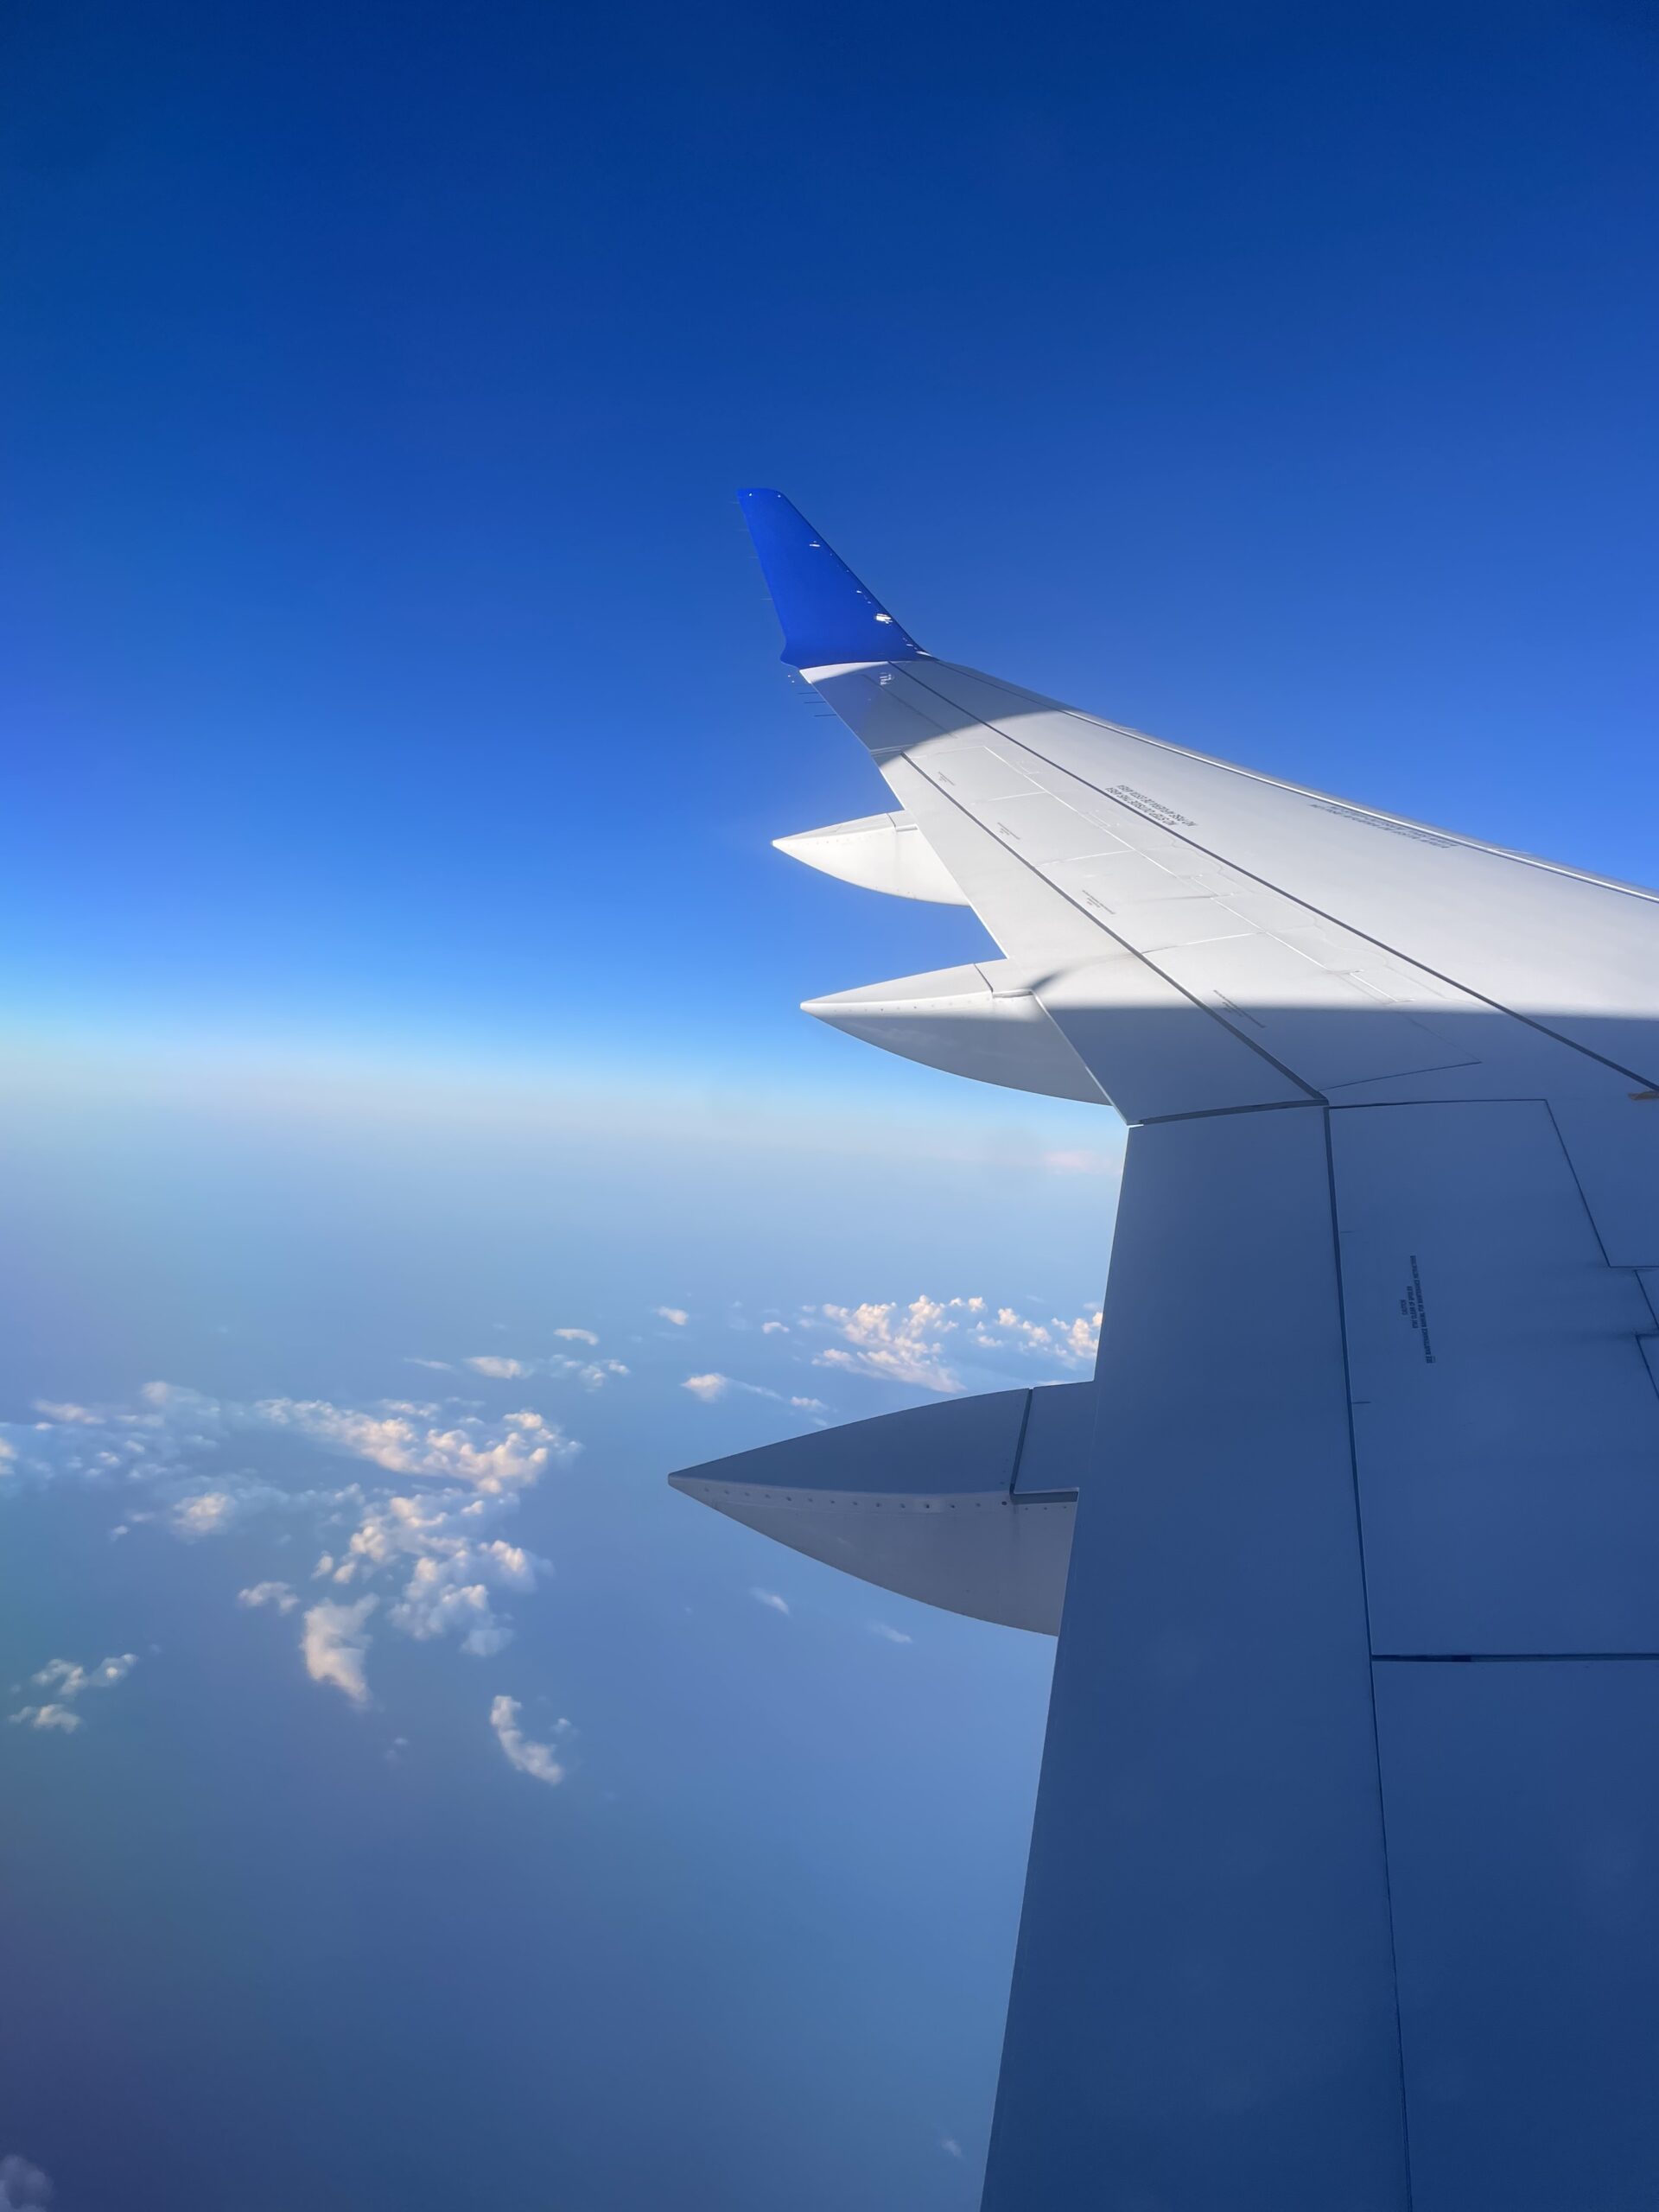 Breeze Airways Customer Reviews - SKYTRAX